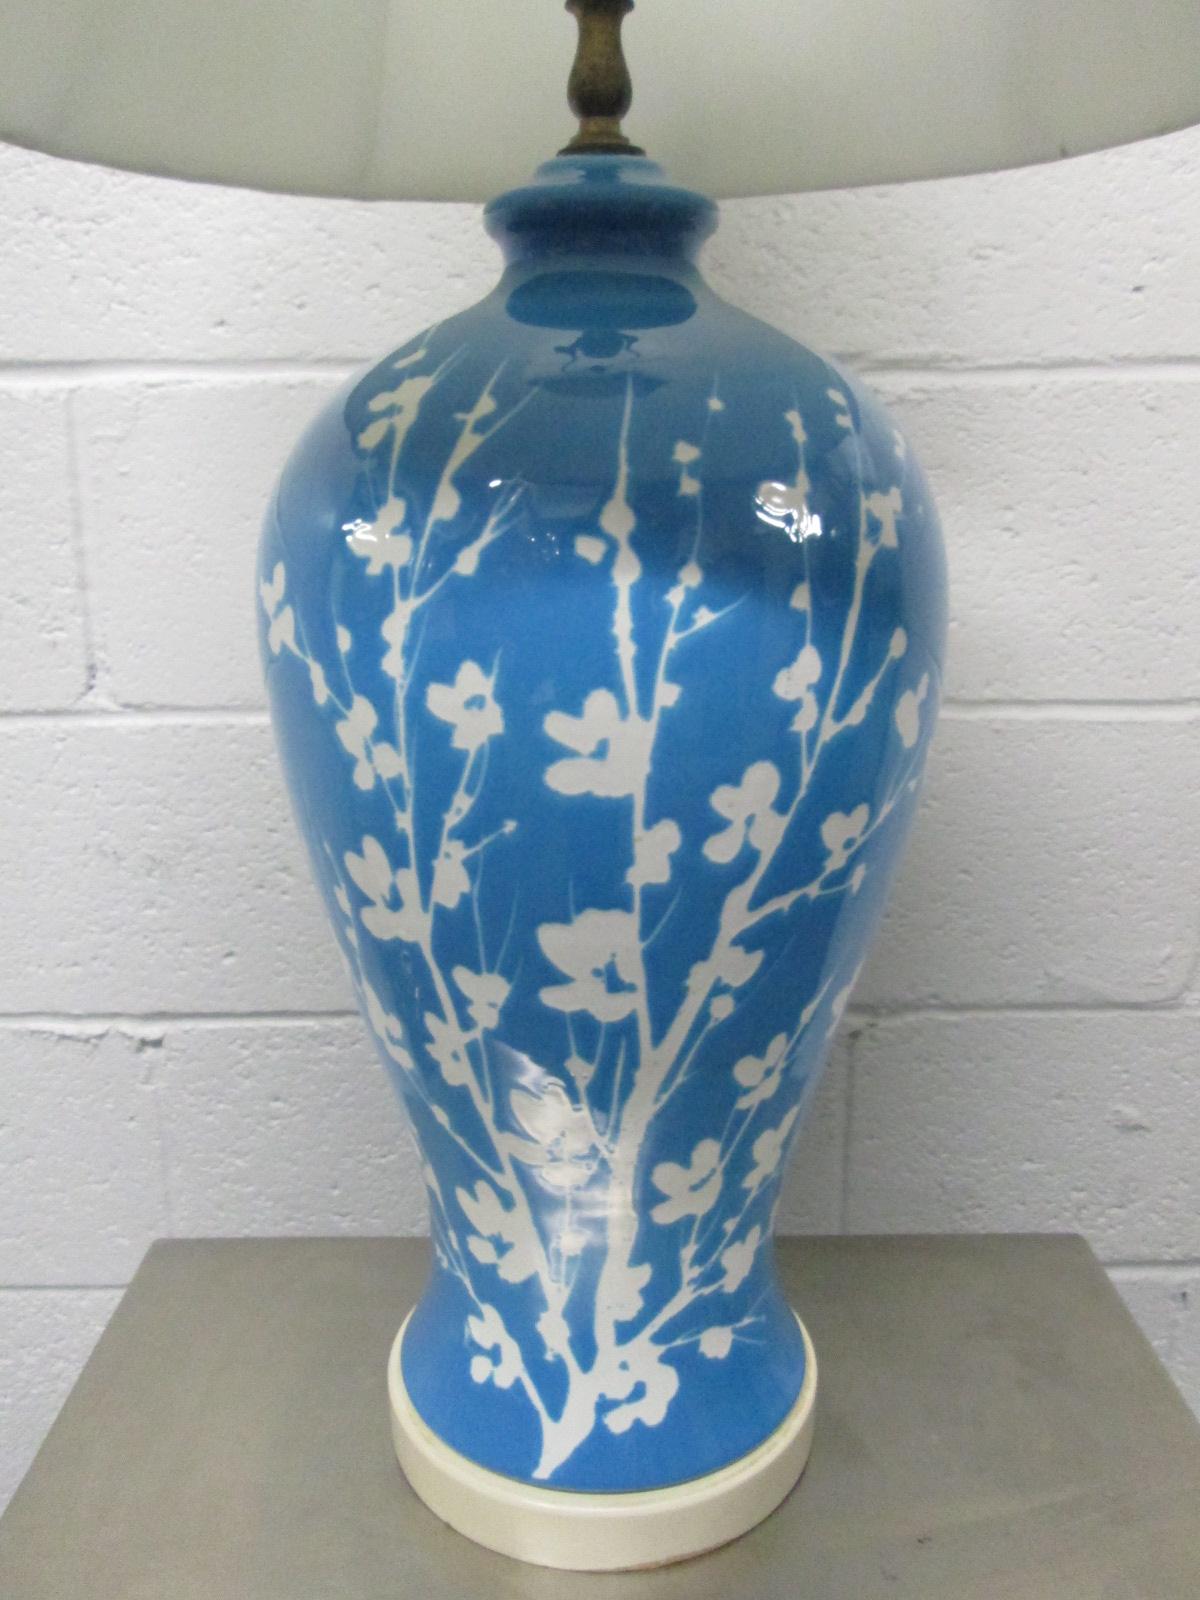 Pair of blue ceramic floral lamps.
Measures: 33